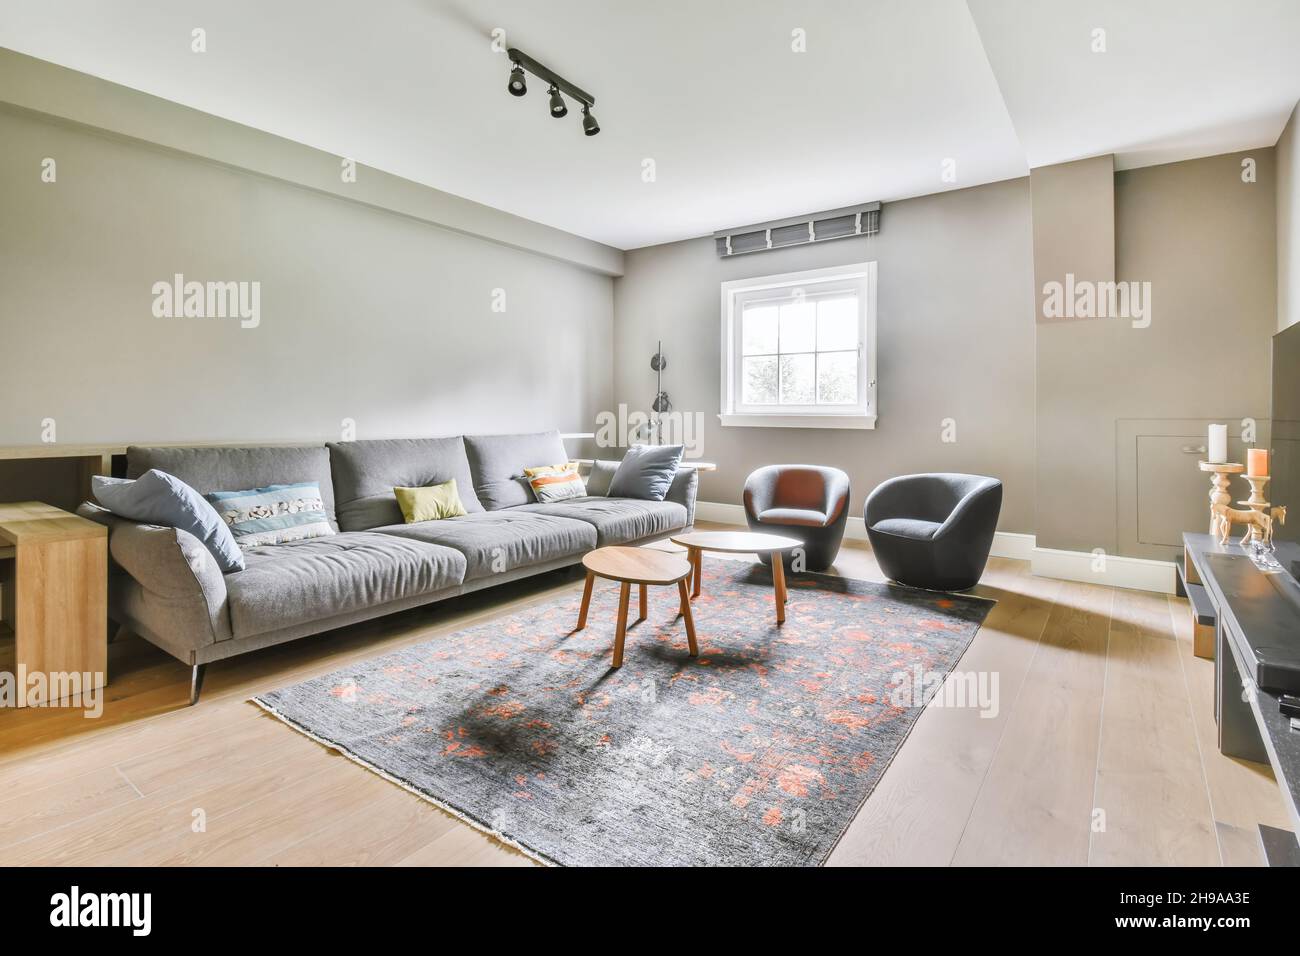 Stunning living room with plush comfy and plush sofas Stock Photo